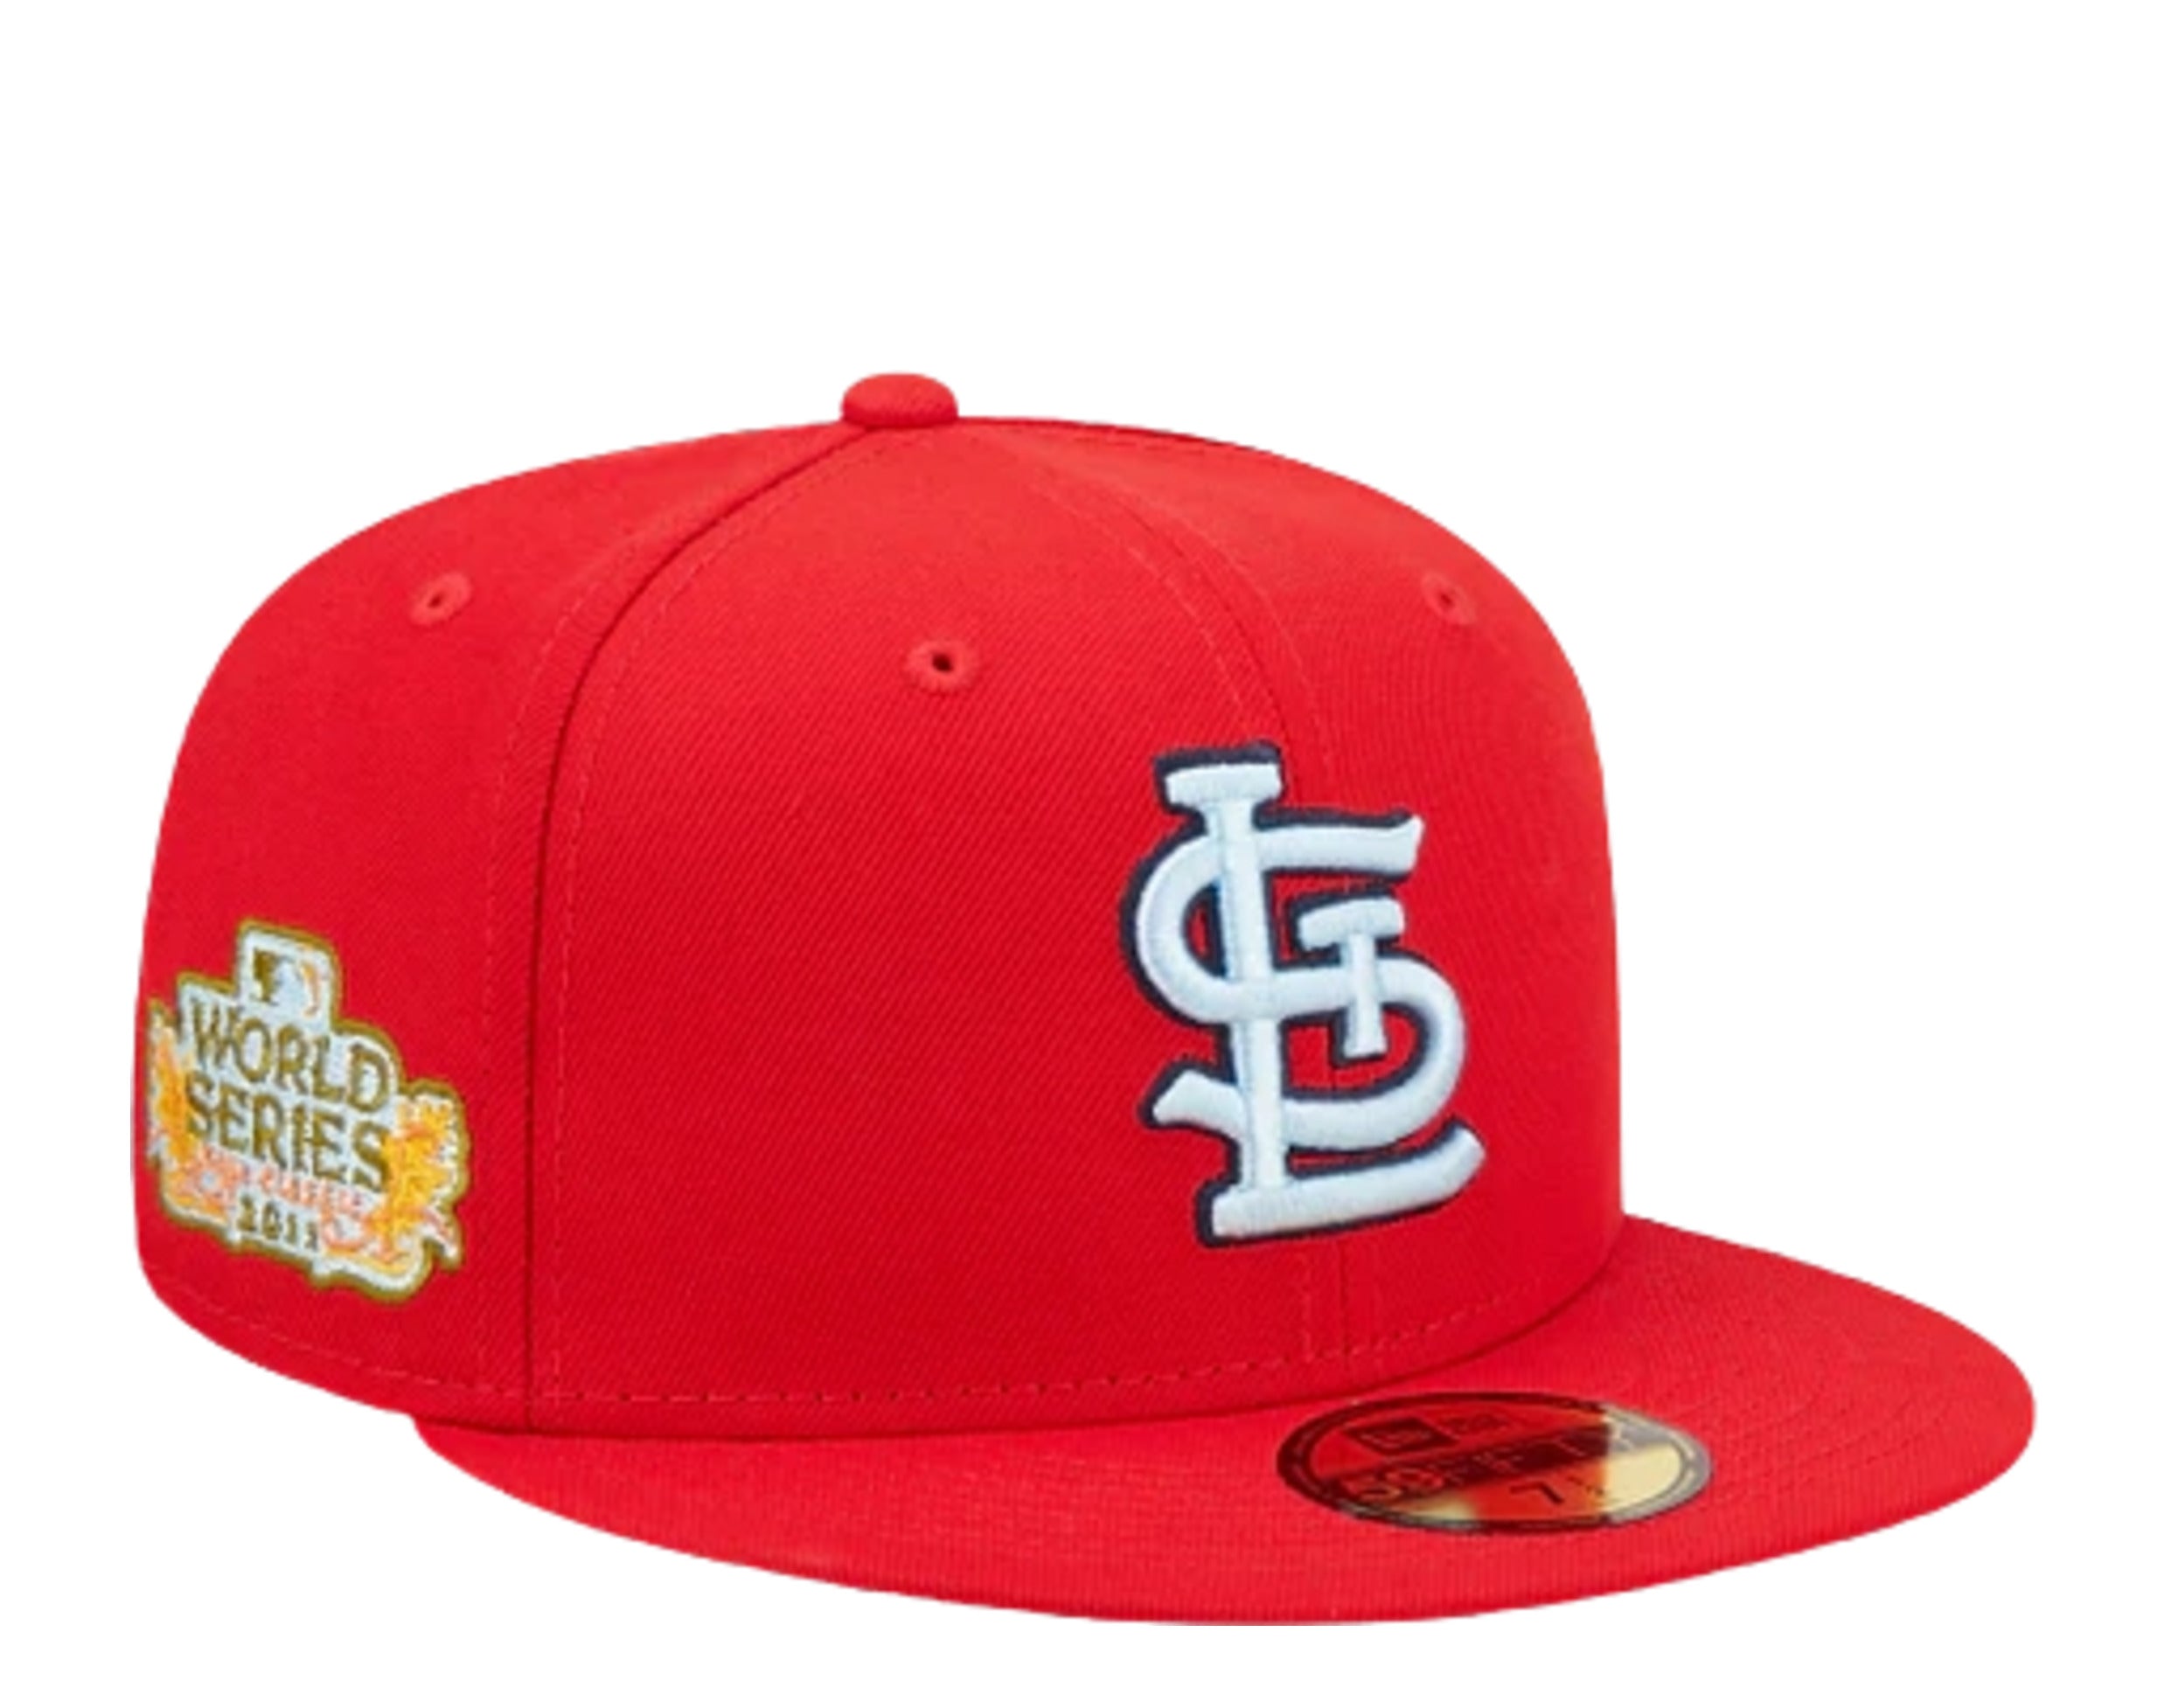 St. Louis Cardinals Hats, Cardinals Gear, St. Louis Cardinals Pro